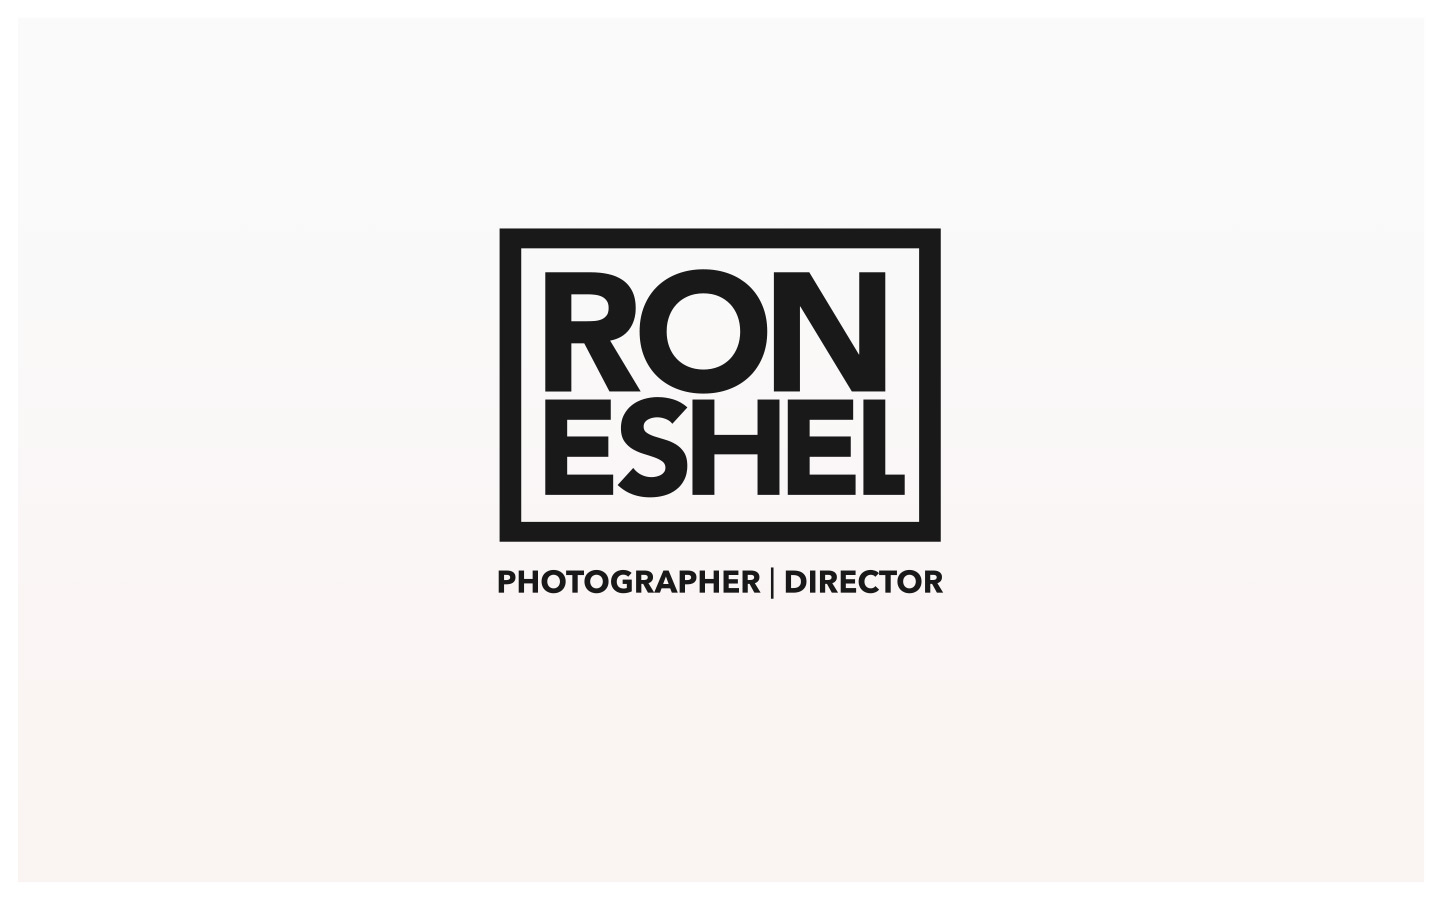 roneshel logo